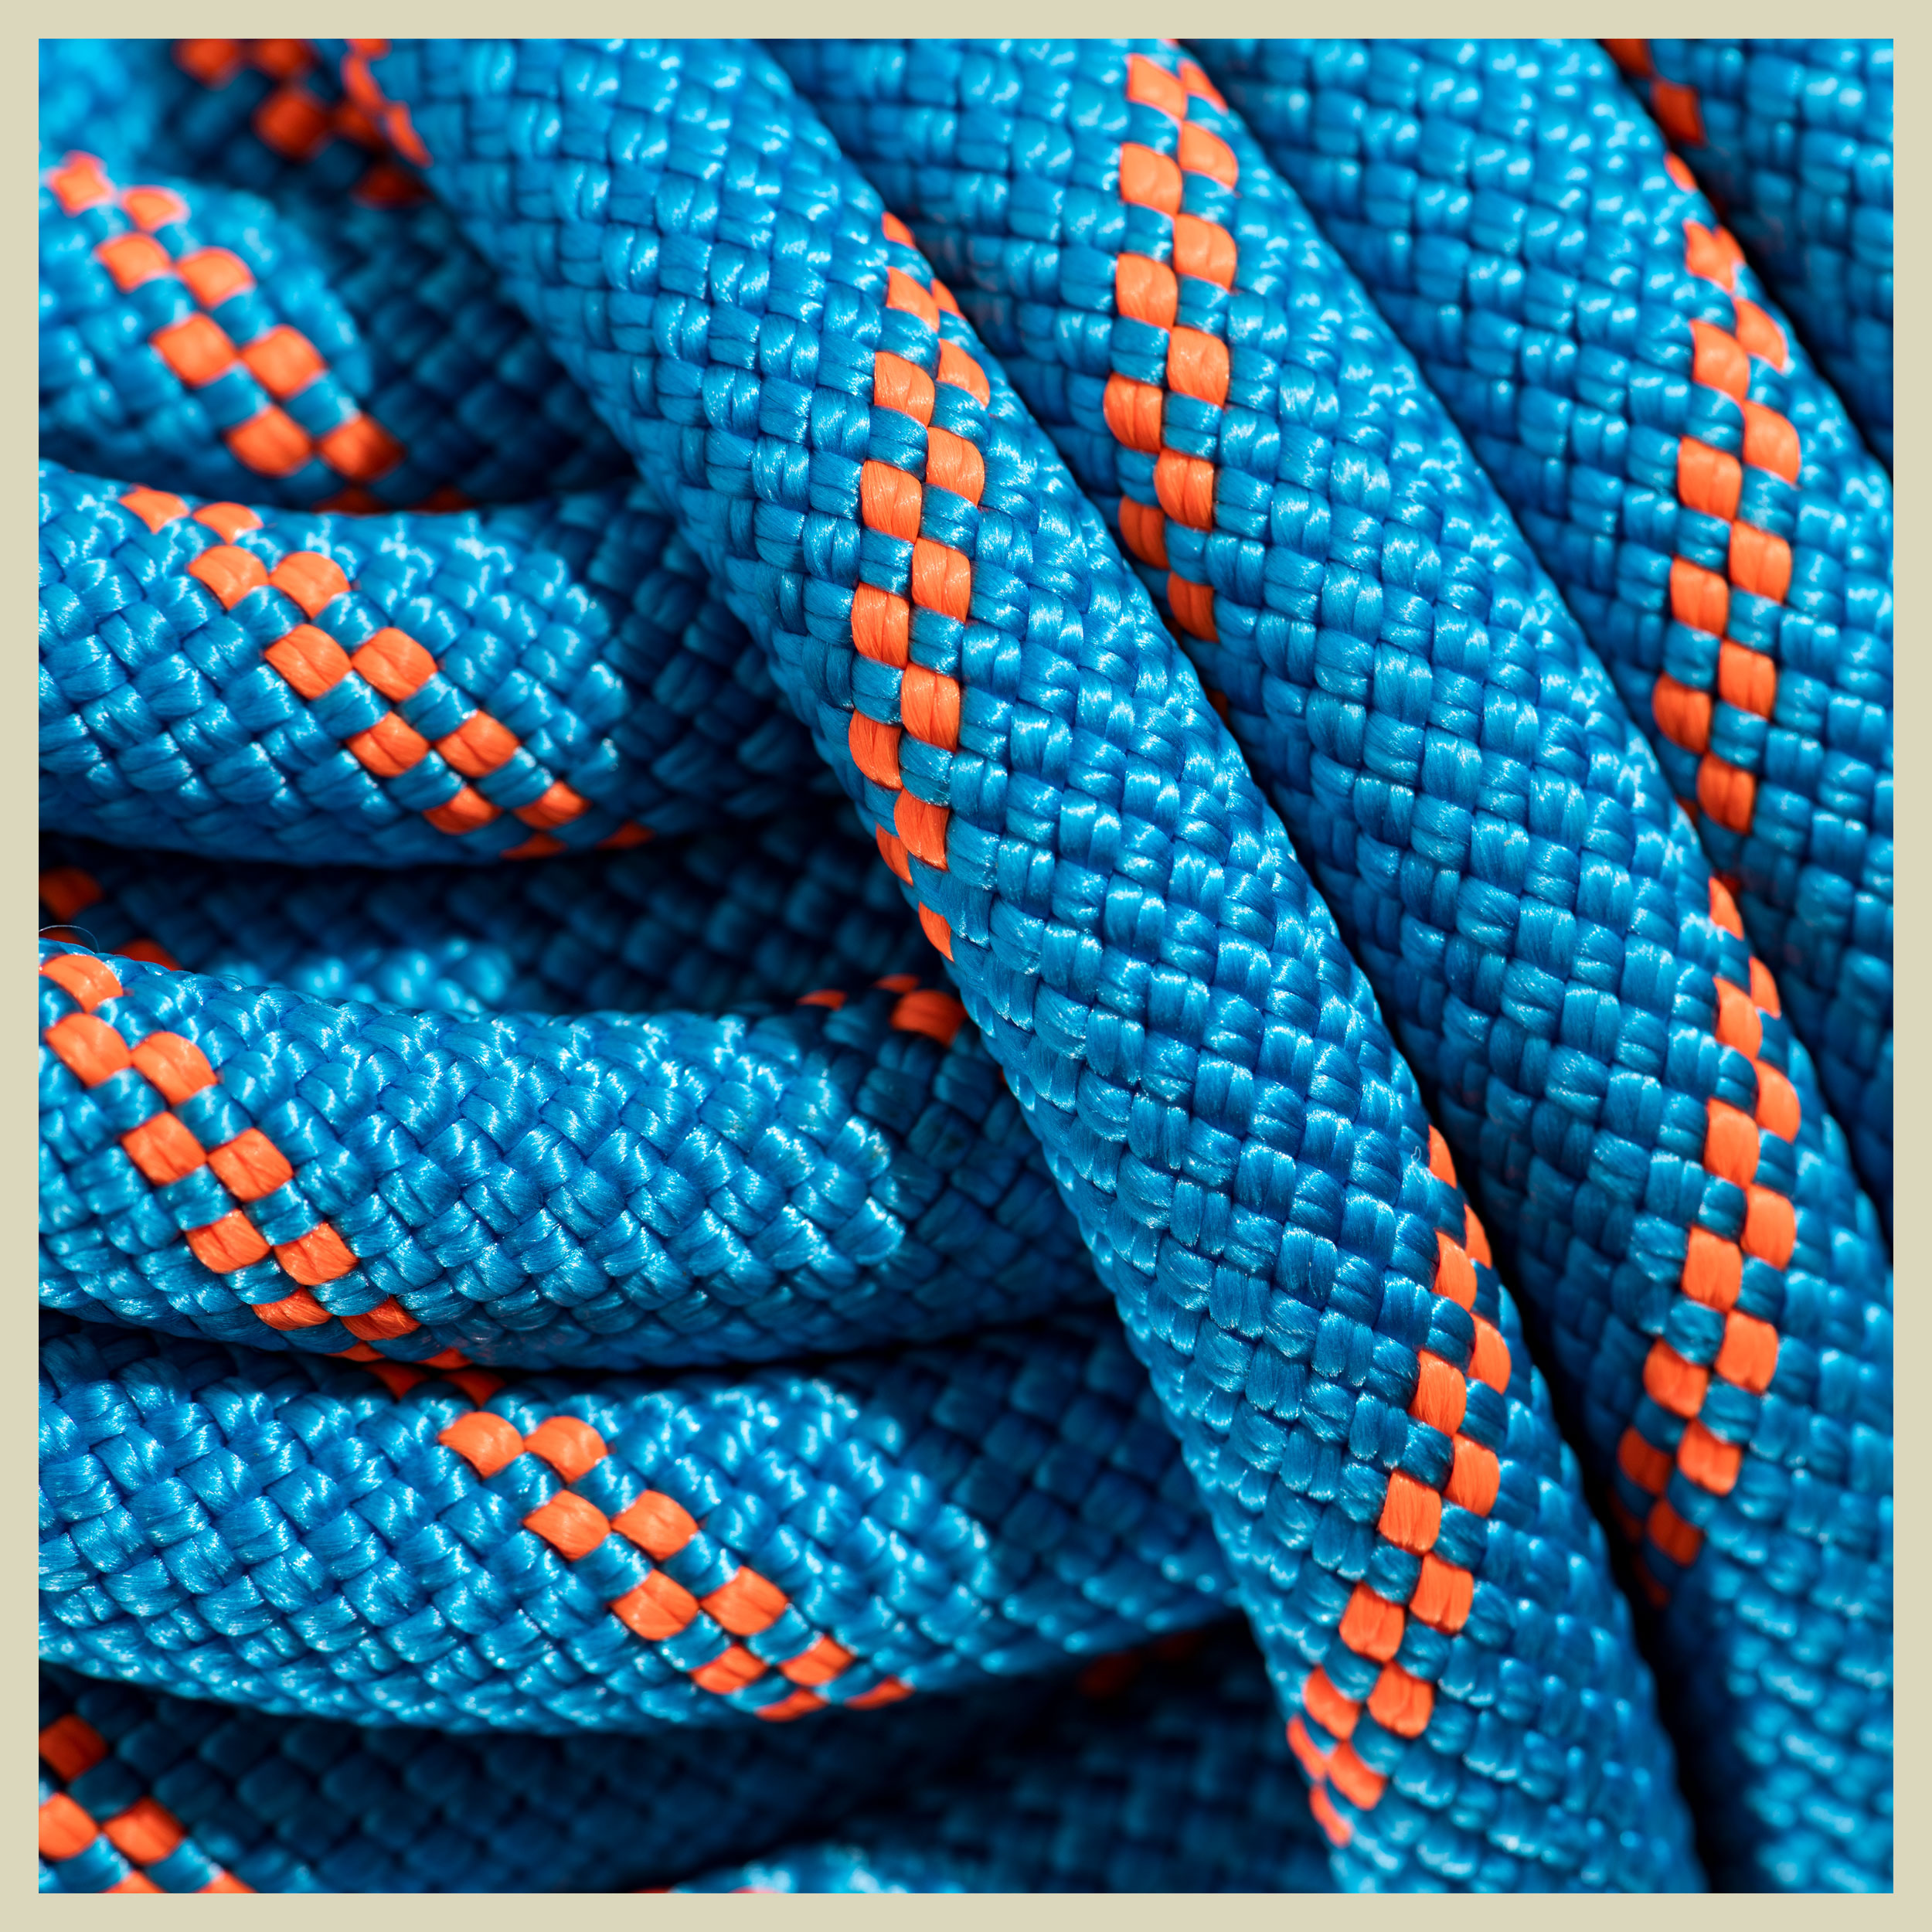 8.7 Alpine Sender Dry Rope Länge 60 m Farbe Dry Standard ocean-vibrant orange